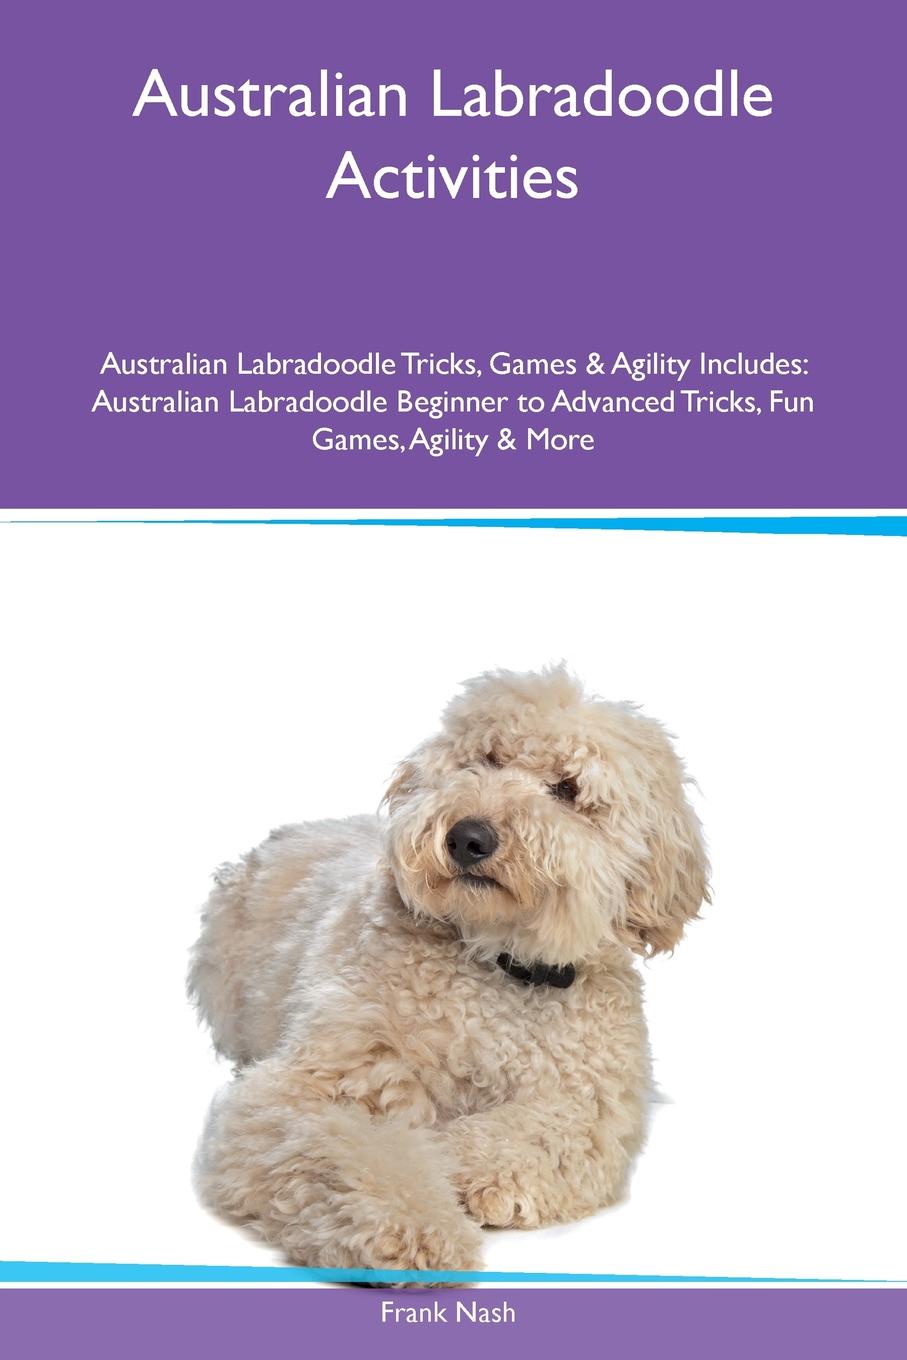 Australian Labradoodle Activities Australian Labradoodle Tricks, Games & Agility Includes. Australian Labradoodle Beginner to Advanced Tricks, Fun Games, Agility & More